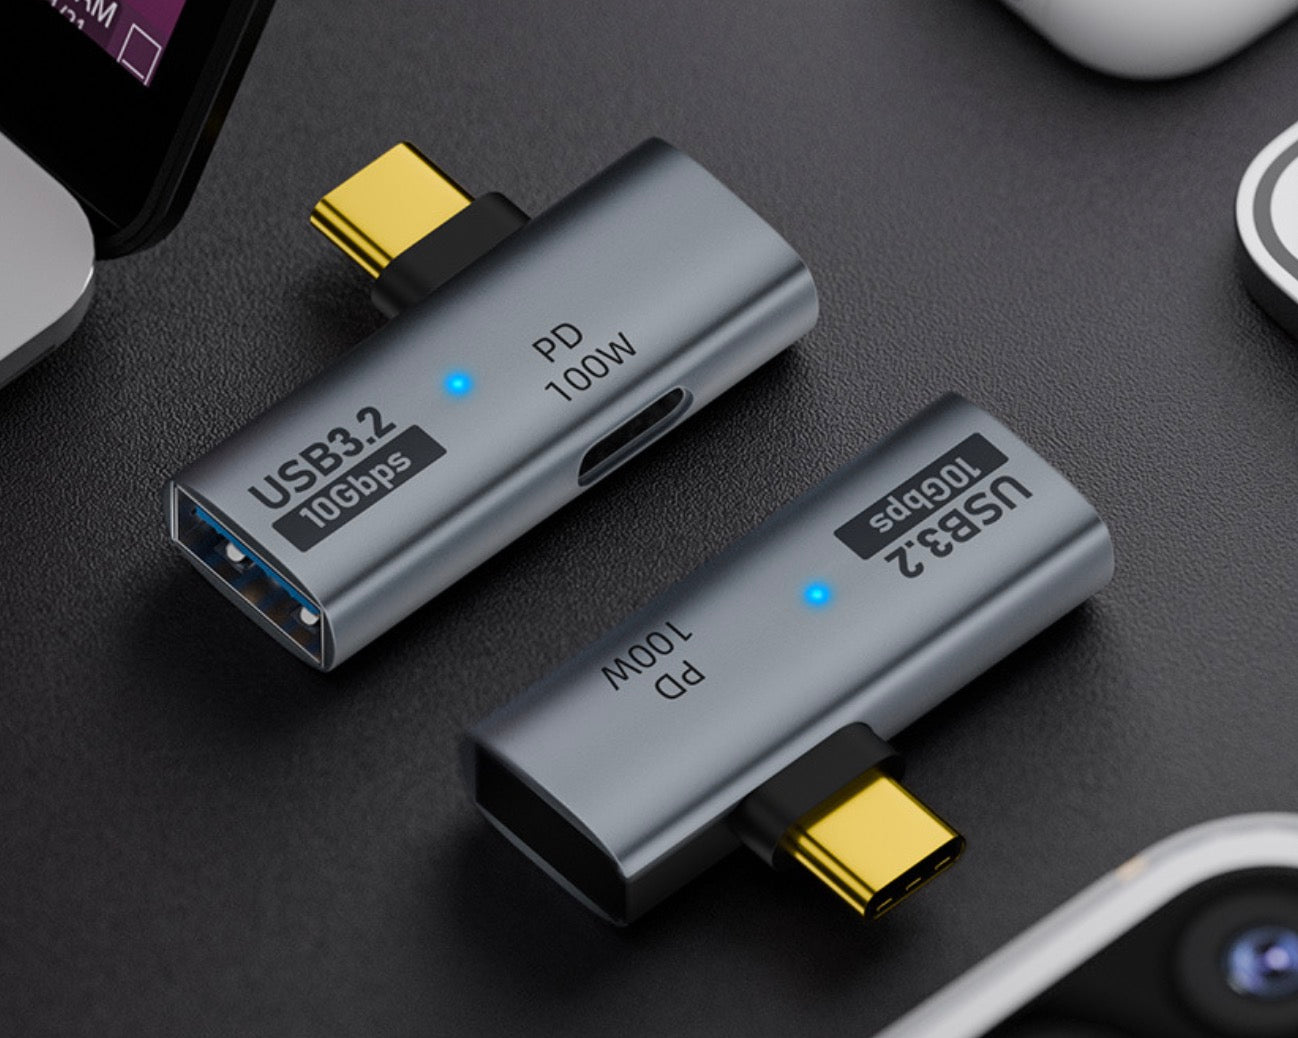 USB C Male & Female to USB 3.0 Female OTG 100W PD Power Adapter 10Gbps